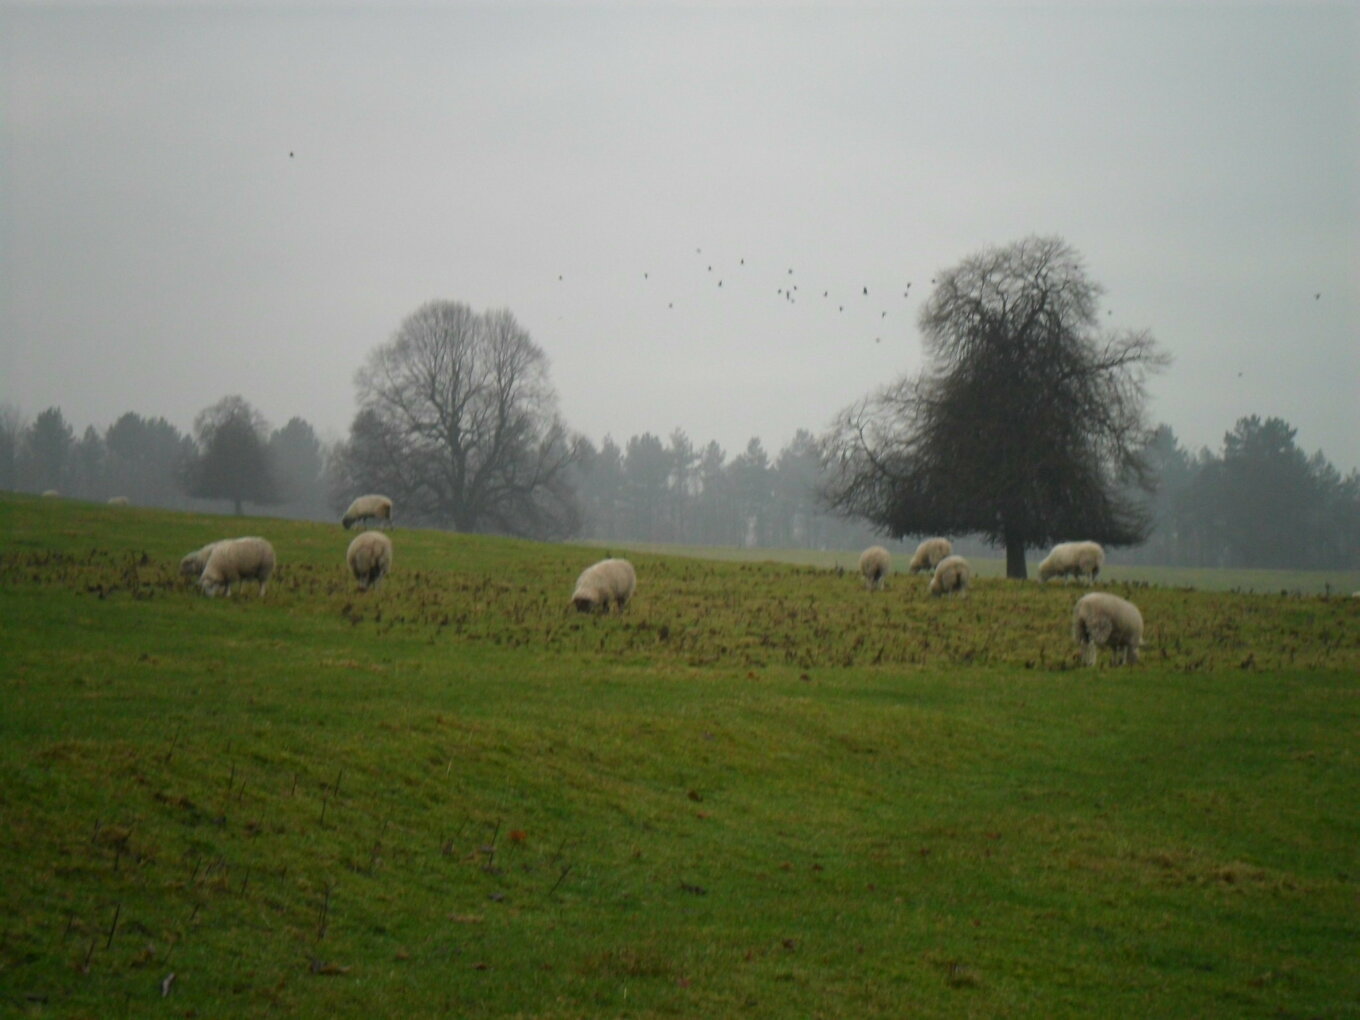 Sheffield sheep